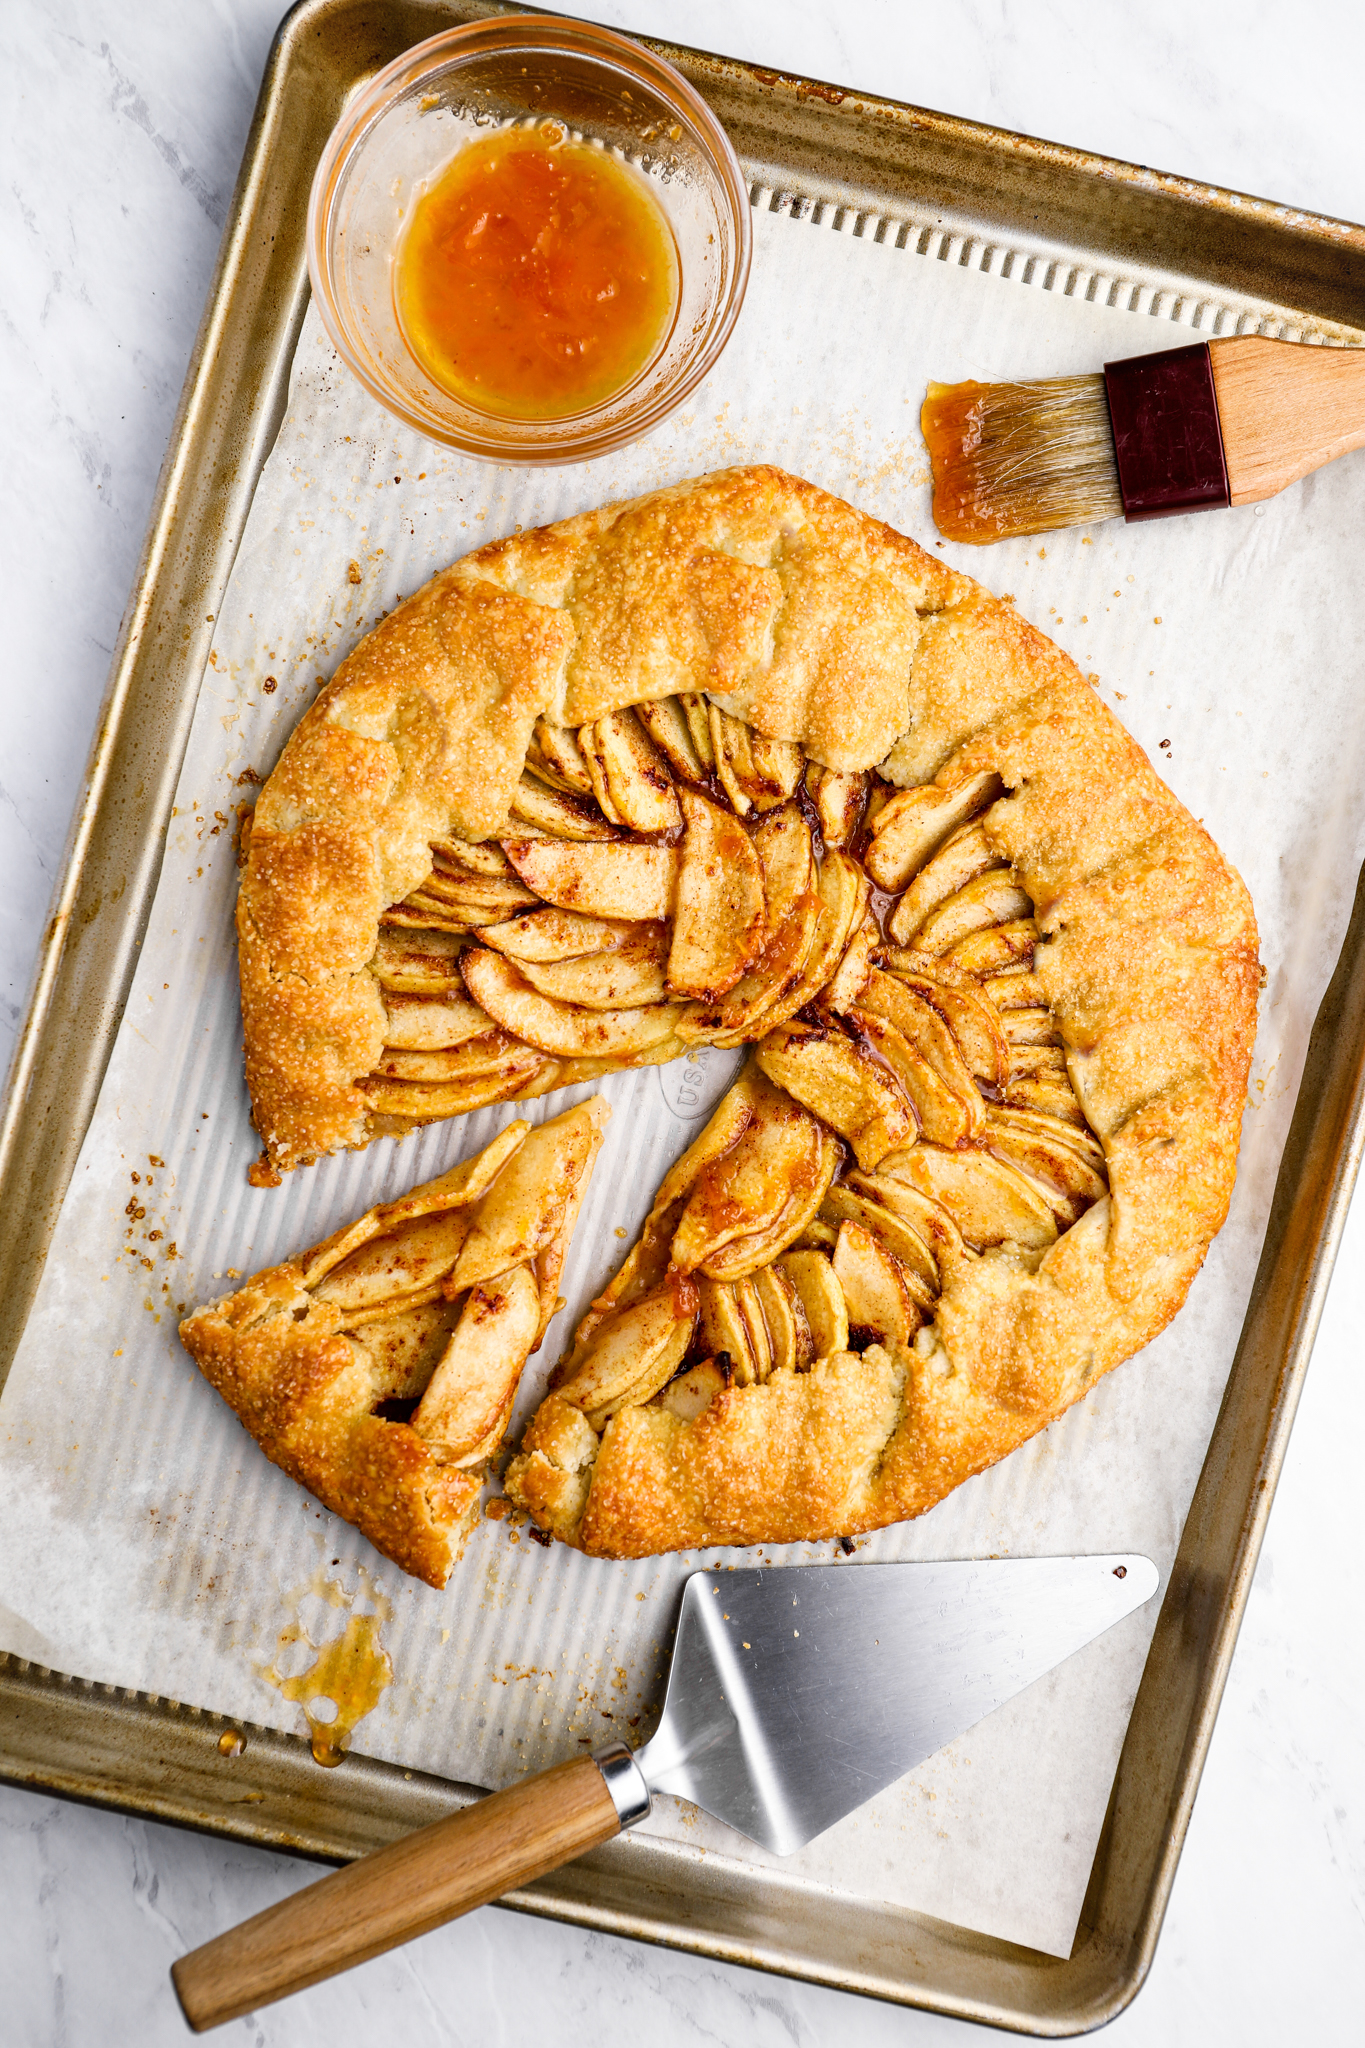 traditional apple pie best recipe